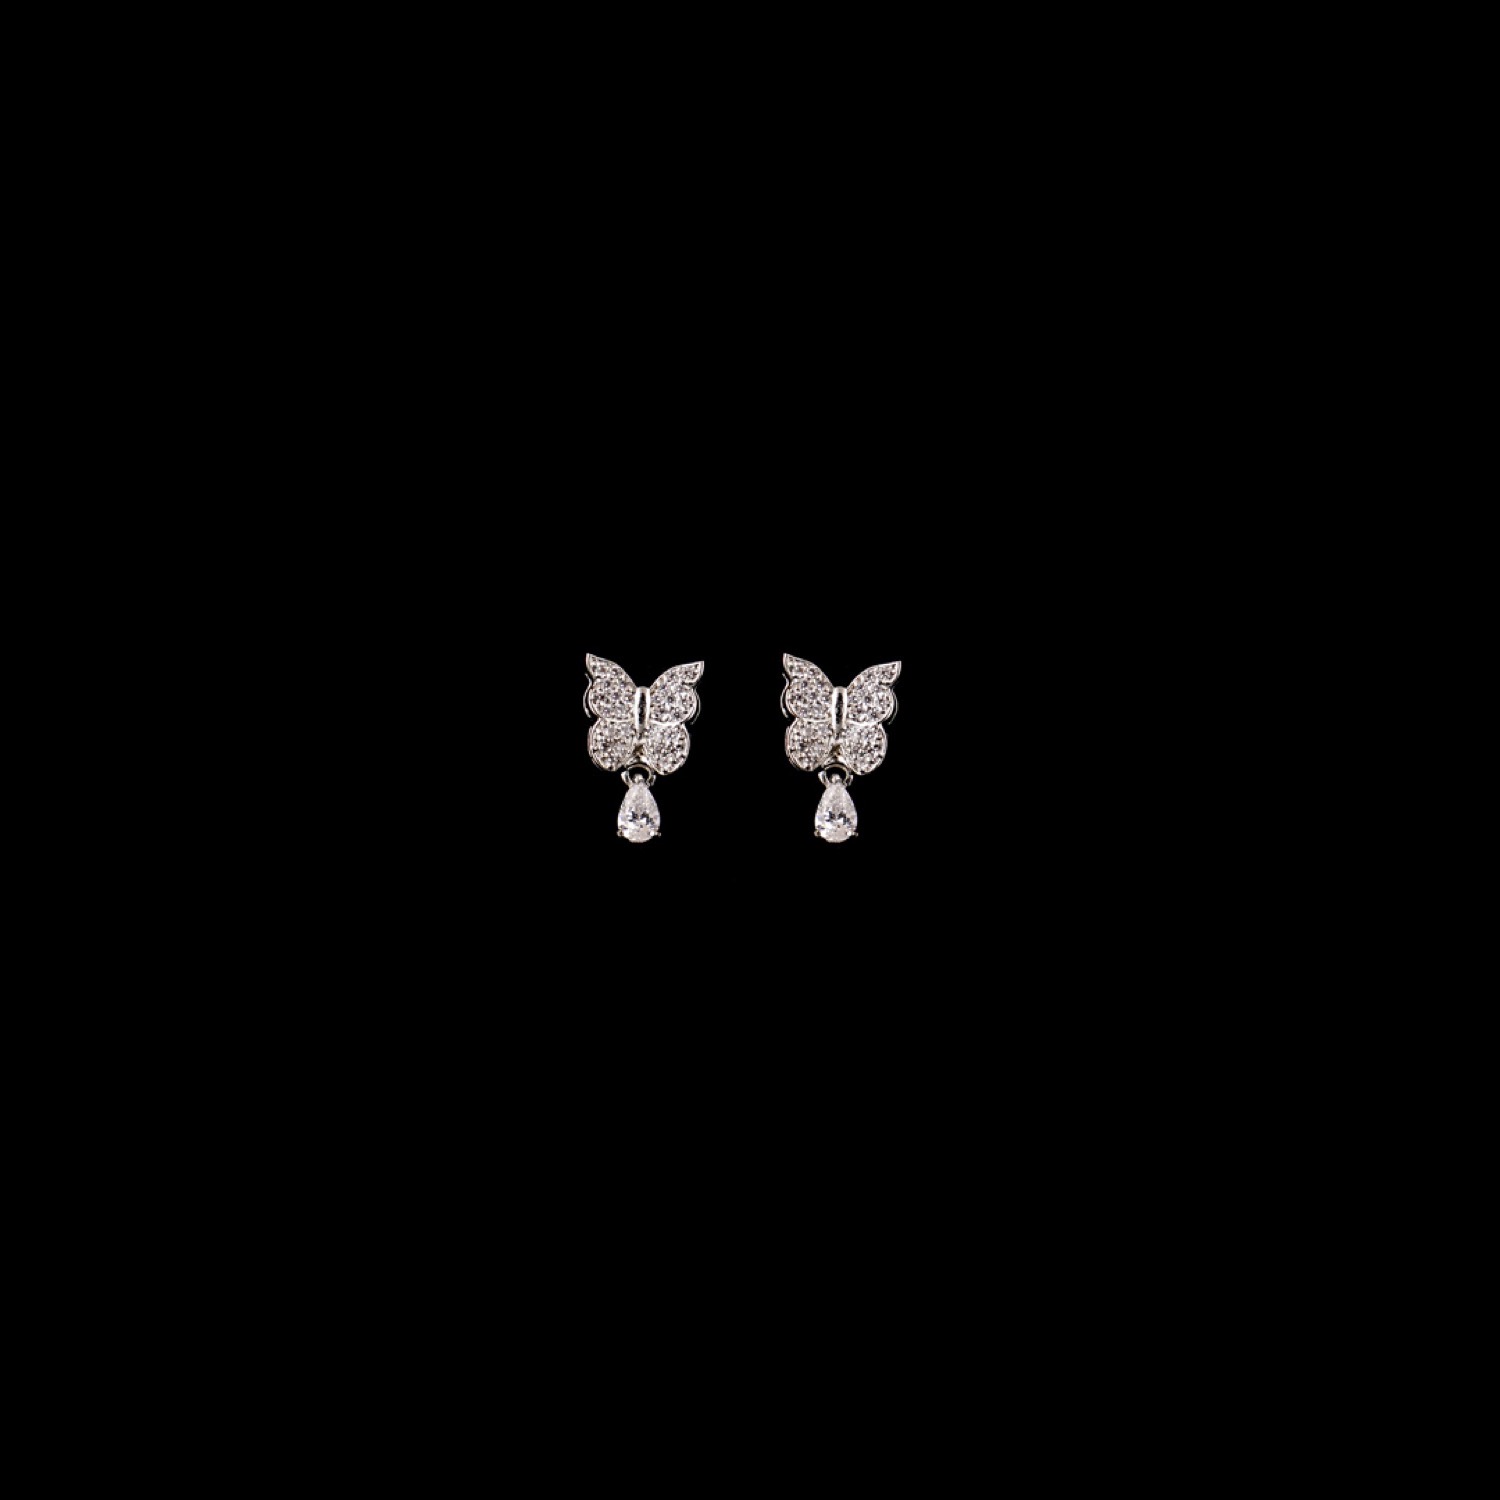 varam_earrings_102022_butterfly_shape_with_small_droping_silver_earrings-1